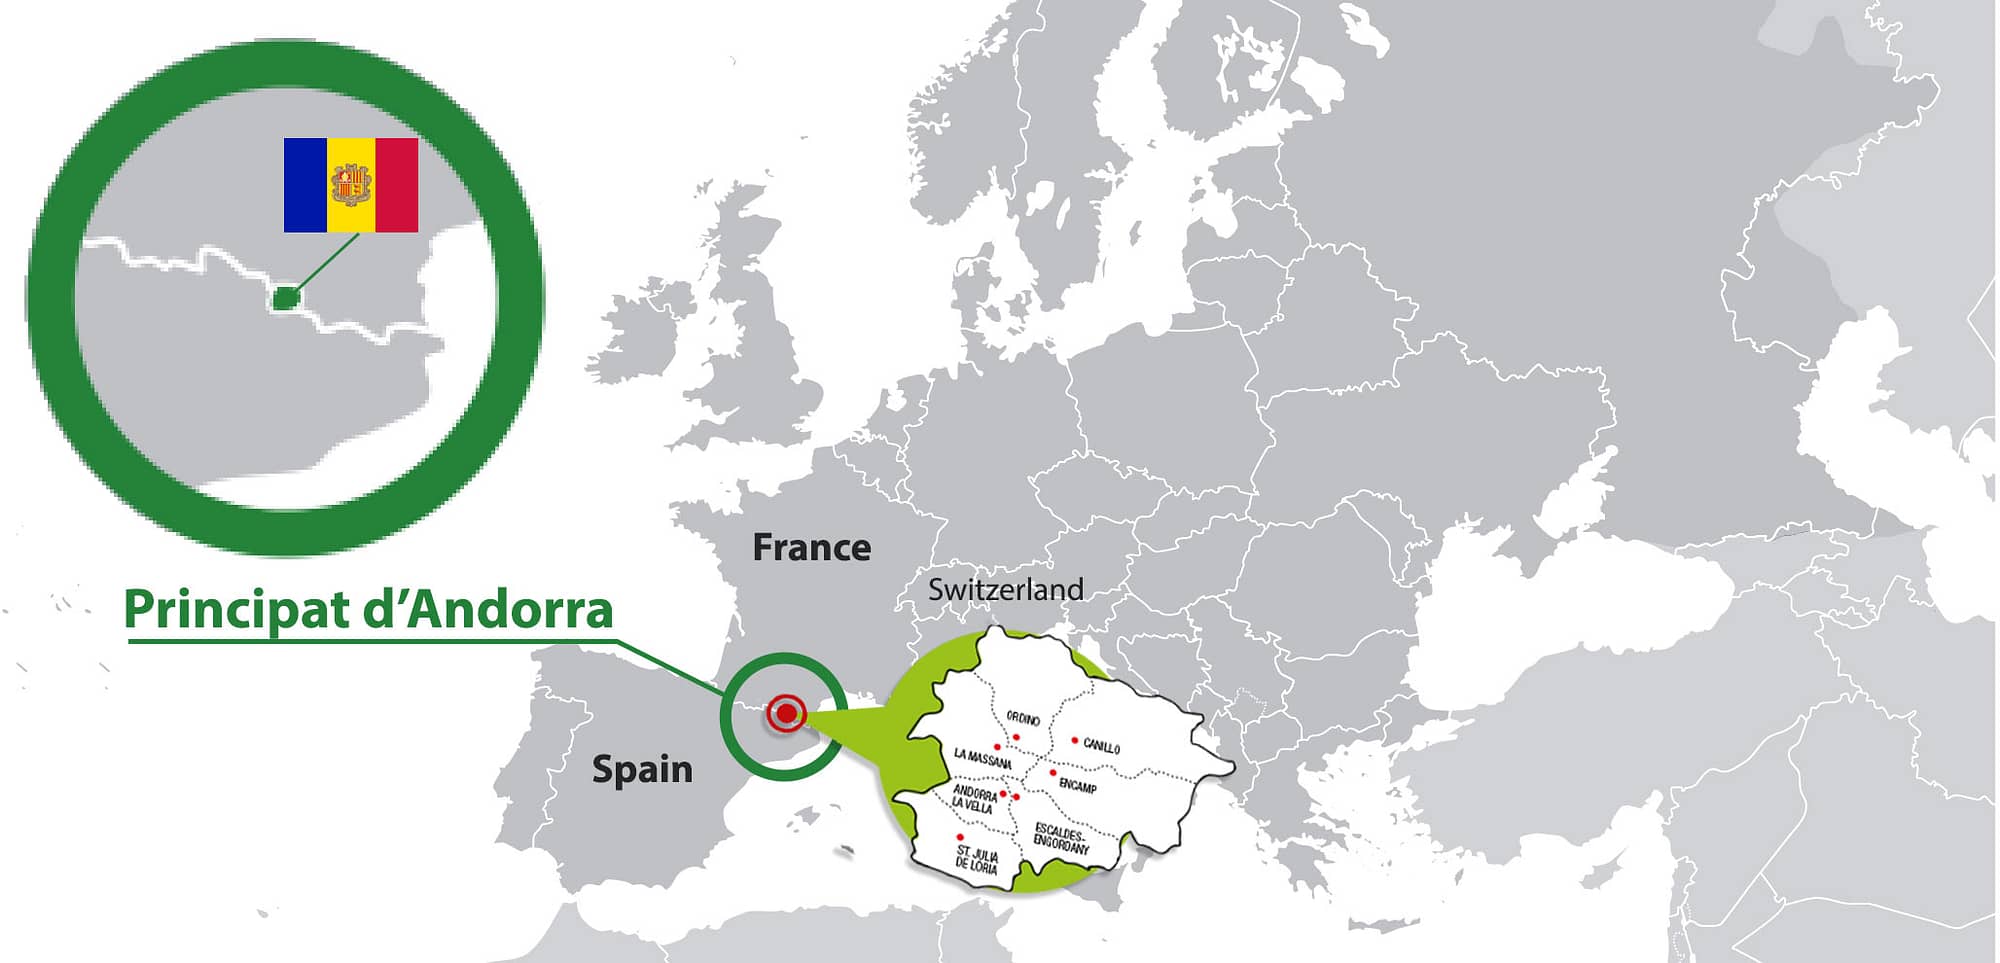 Our storymap Freemindtronic Principat d'Andorra Europe